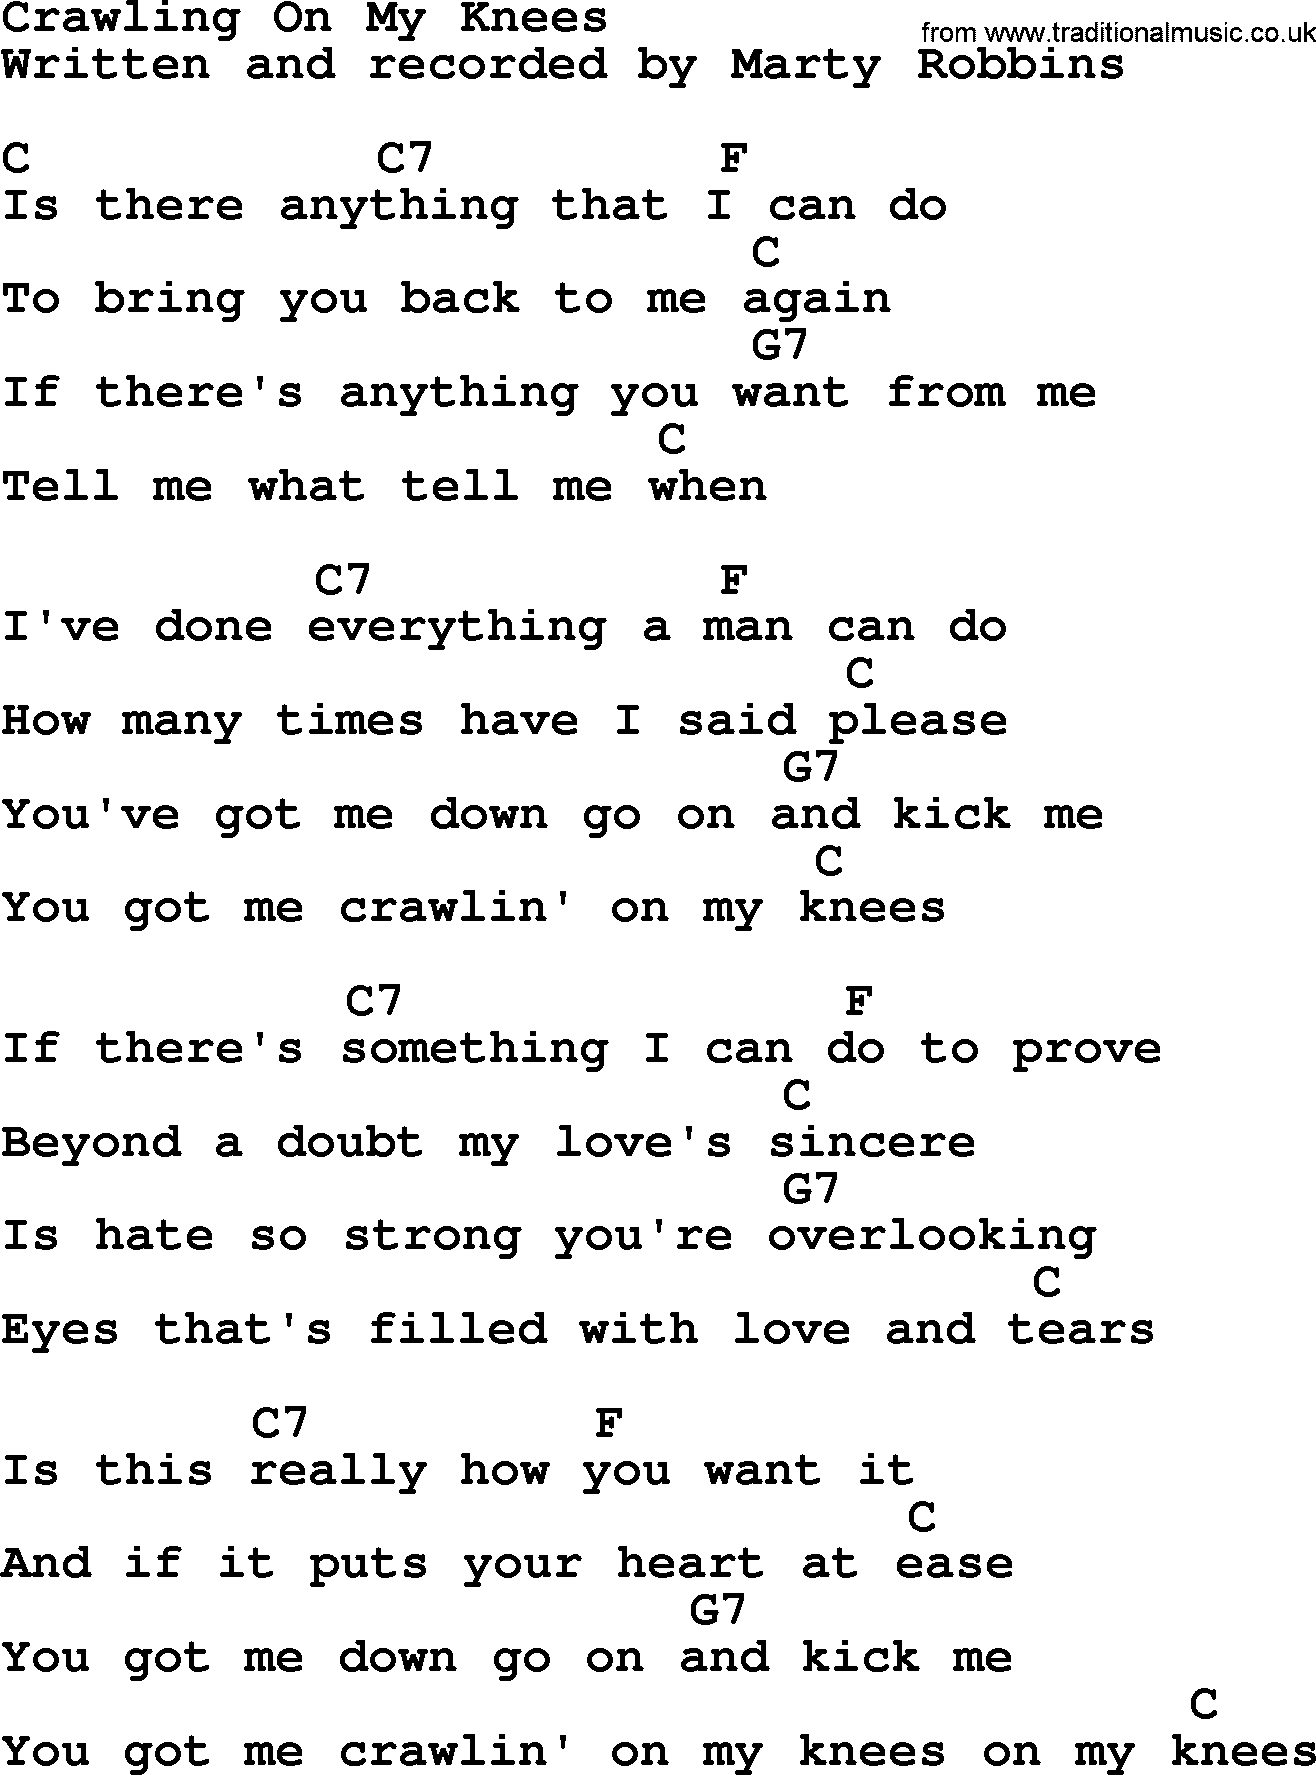 Marty Robbins song: Crawling On My Knees, lyrics and chords